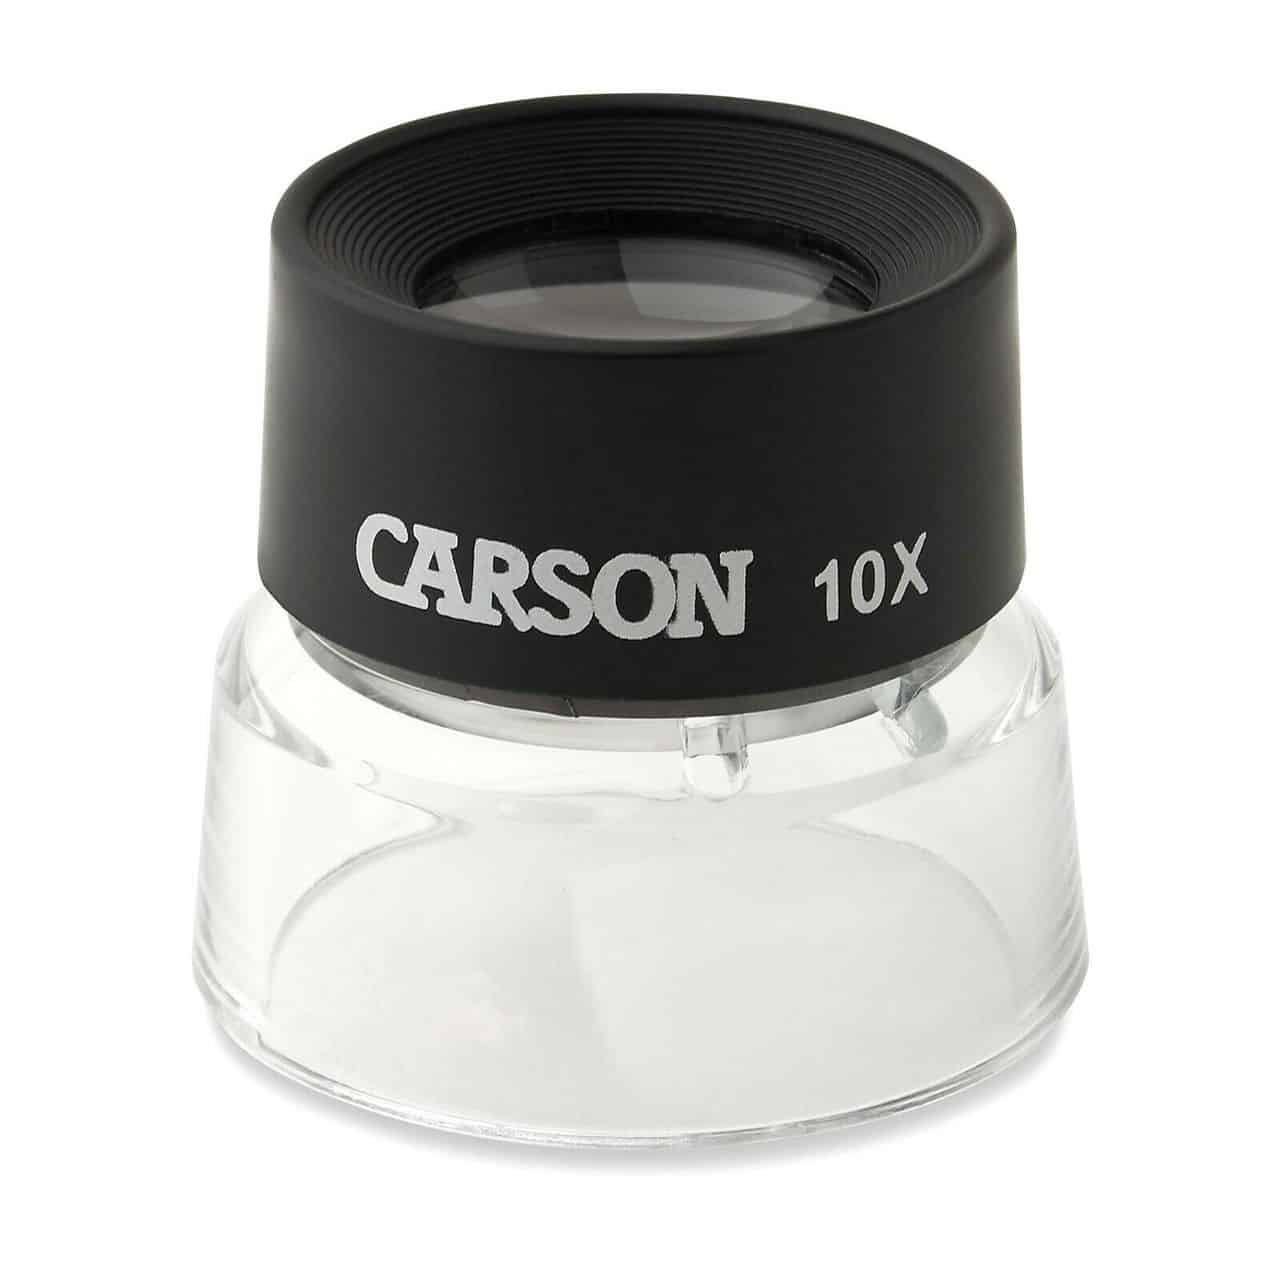 Carson 4.5X MagniGrip Lighted Tweezers : lighted fine point